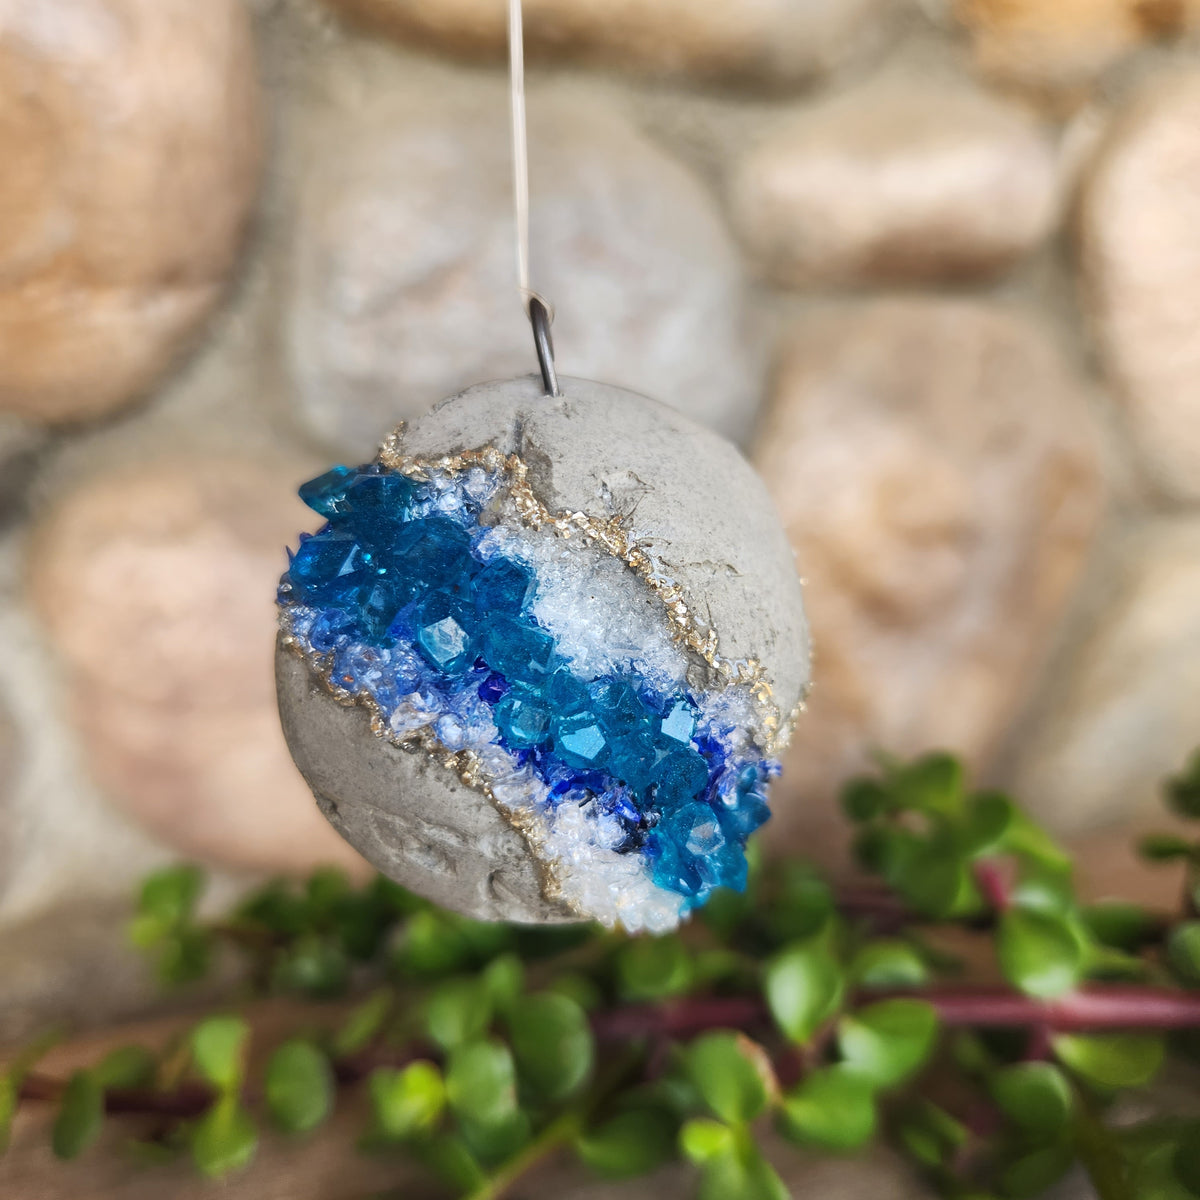 (#1239) Blue Geode Ornament